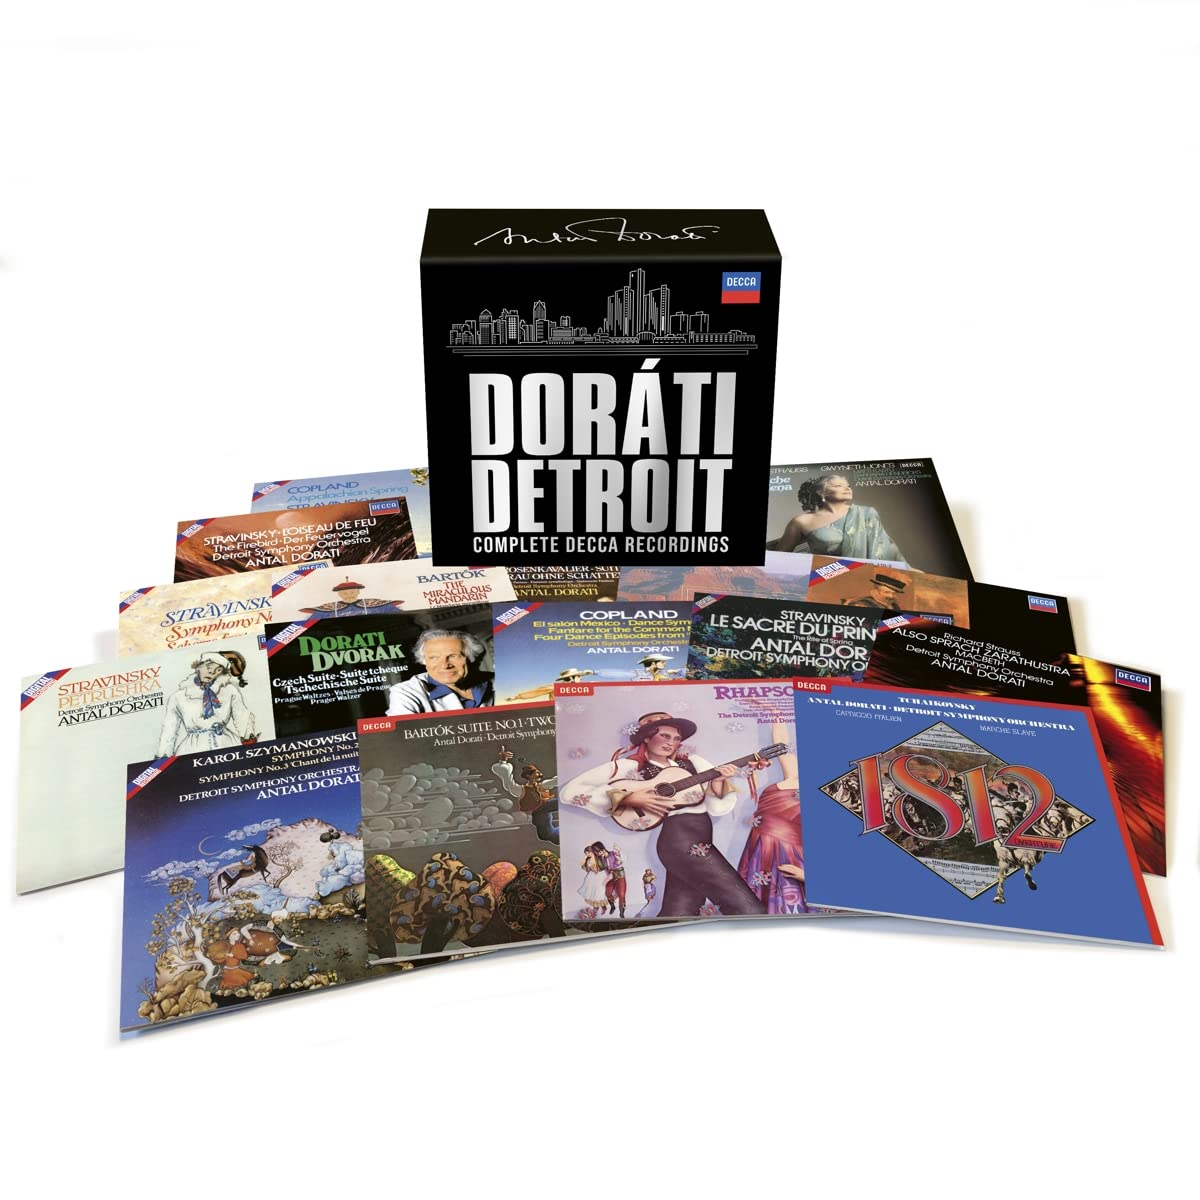 Antal Dorati 안탈 도라티 & 디트로이트 심포니 Decca 전집 (Dorati in Detroit: Complete Decca Recordings)